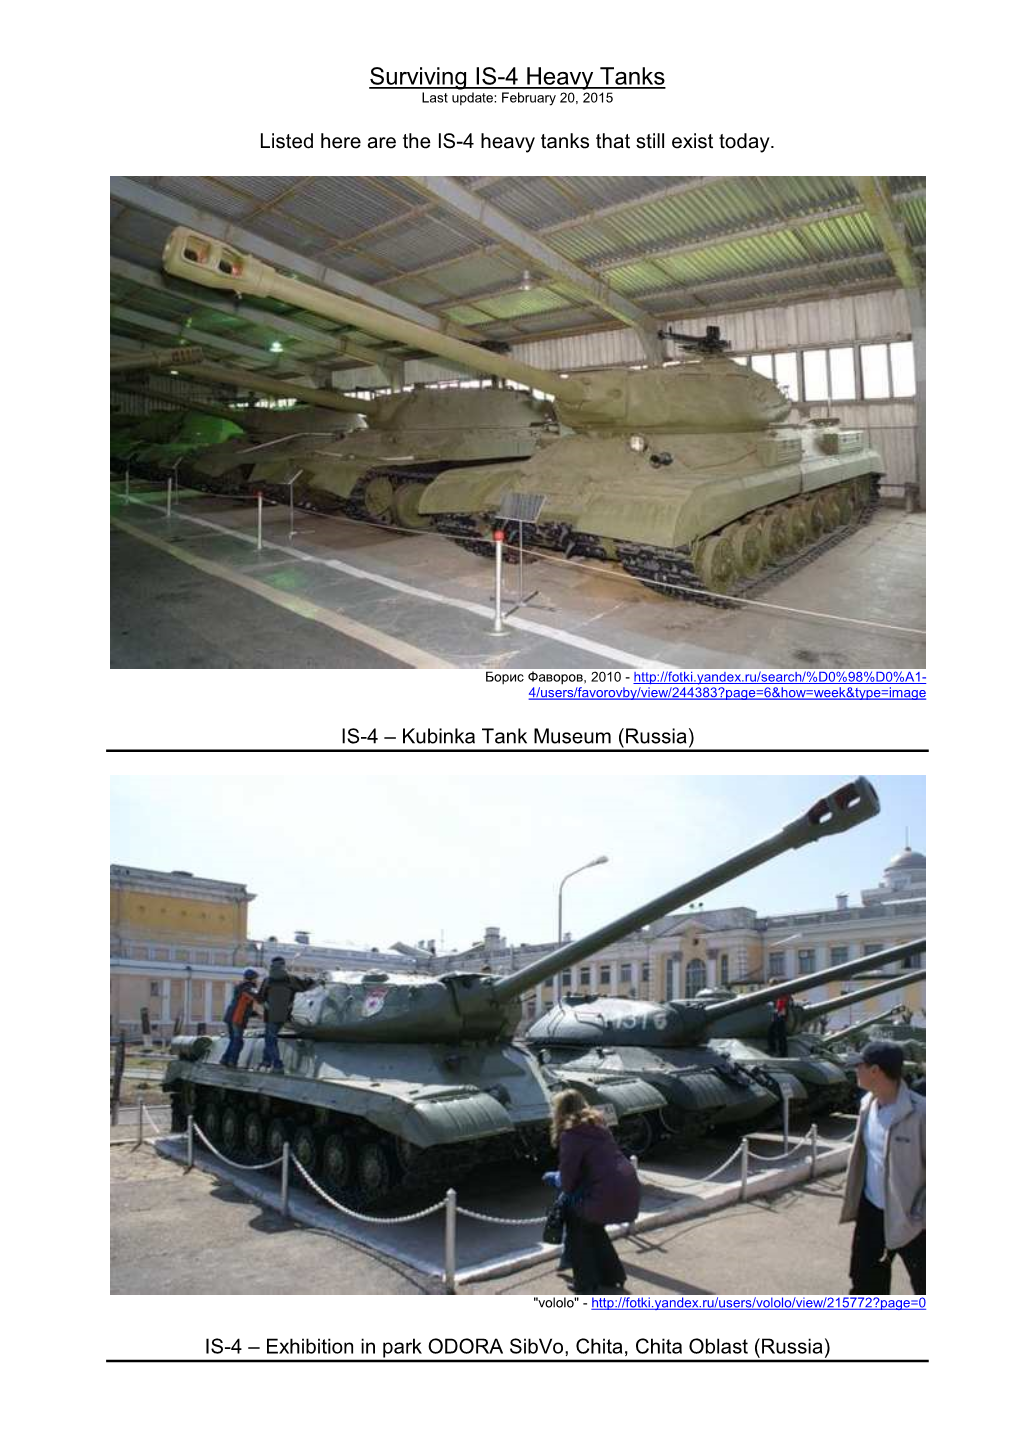 Surviving IS-4 Heavy Tanks Last Update: February 20, 2015